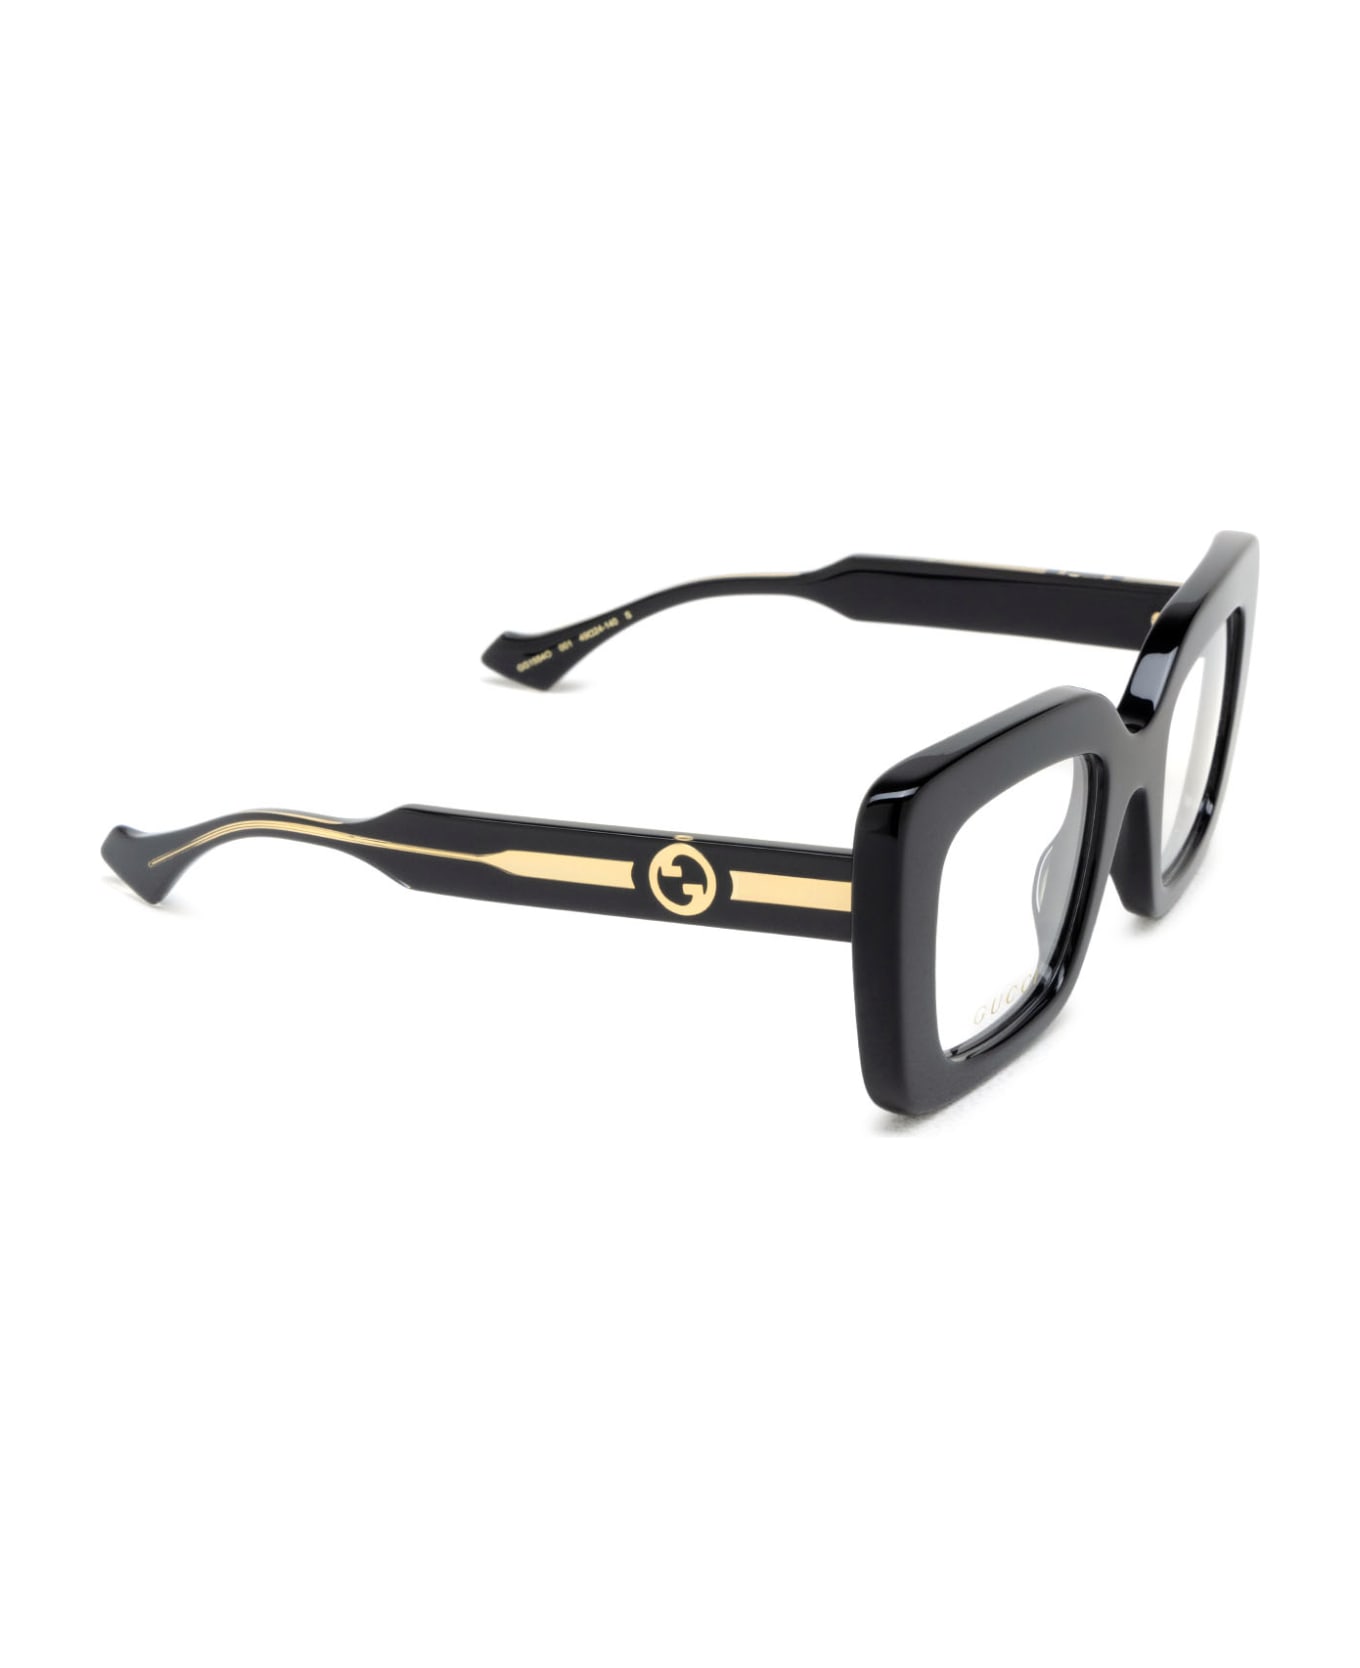 Gucci Eyewear Gg1554o Black Glasses - Black